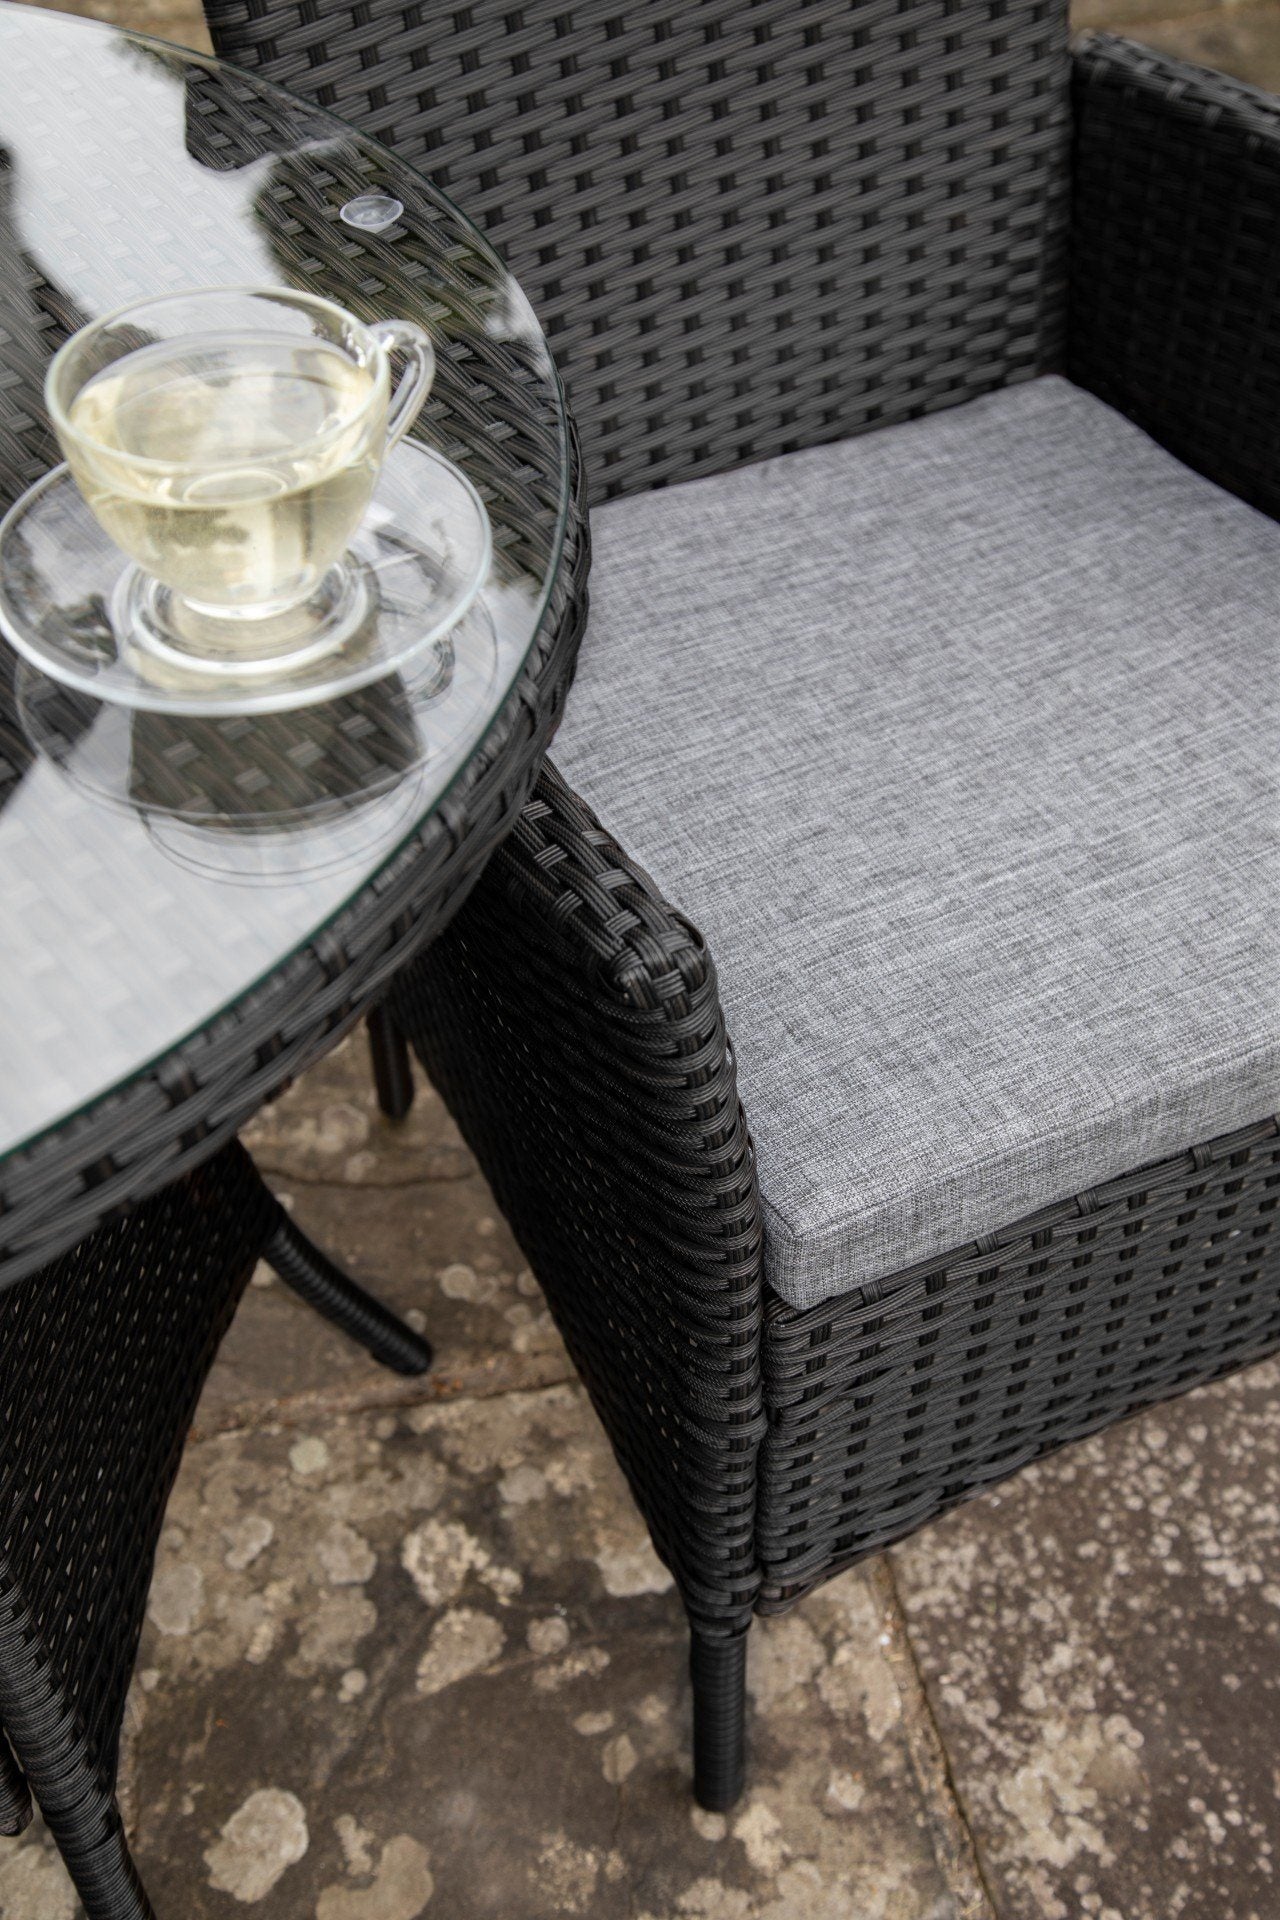 2 Seater Rattan Bistro Dining Set in Black - Garden Furniture - Laura James